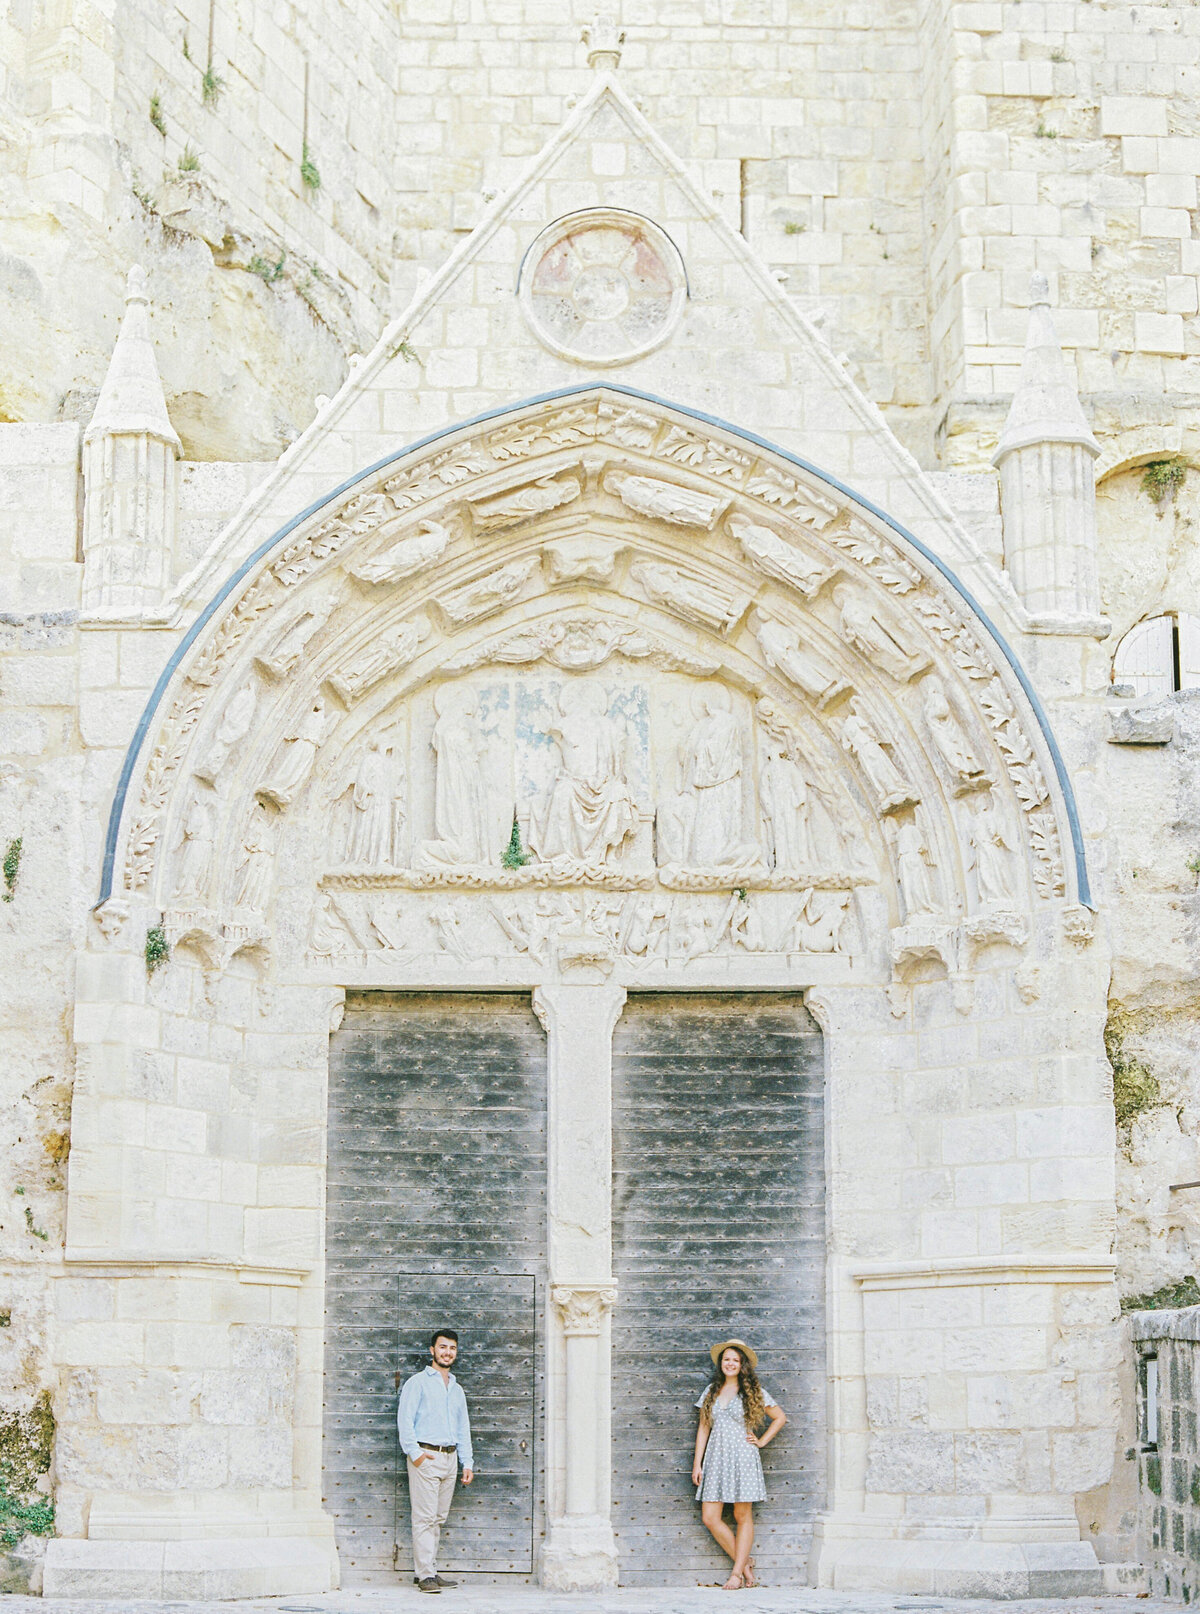 Couple in front of door, architecture, St Emilion, Aquitaine